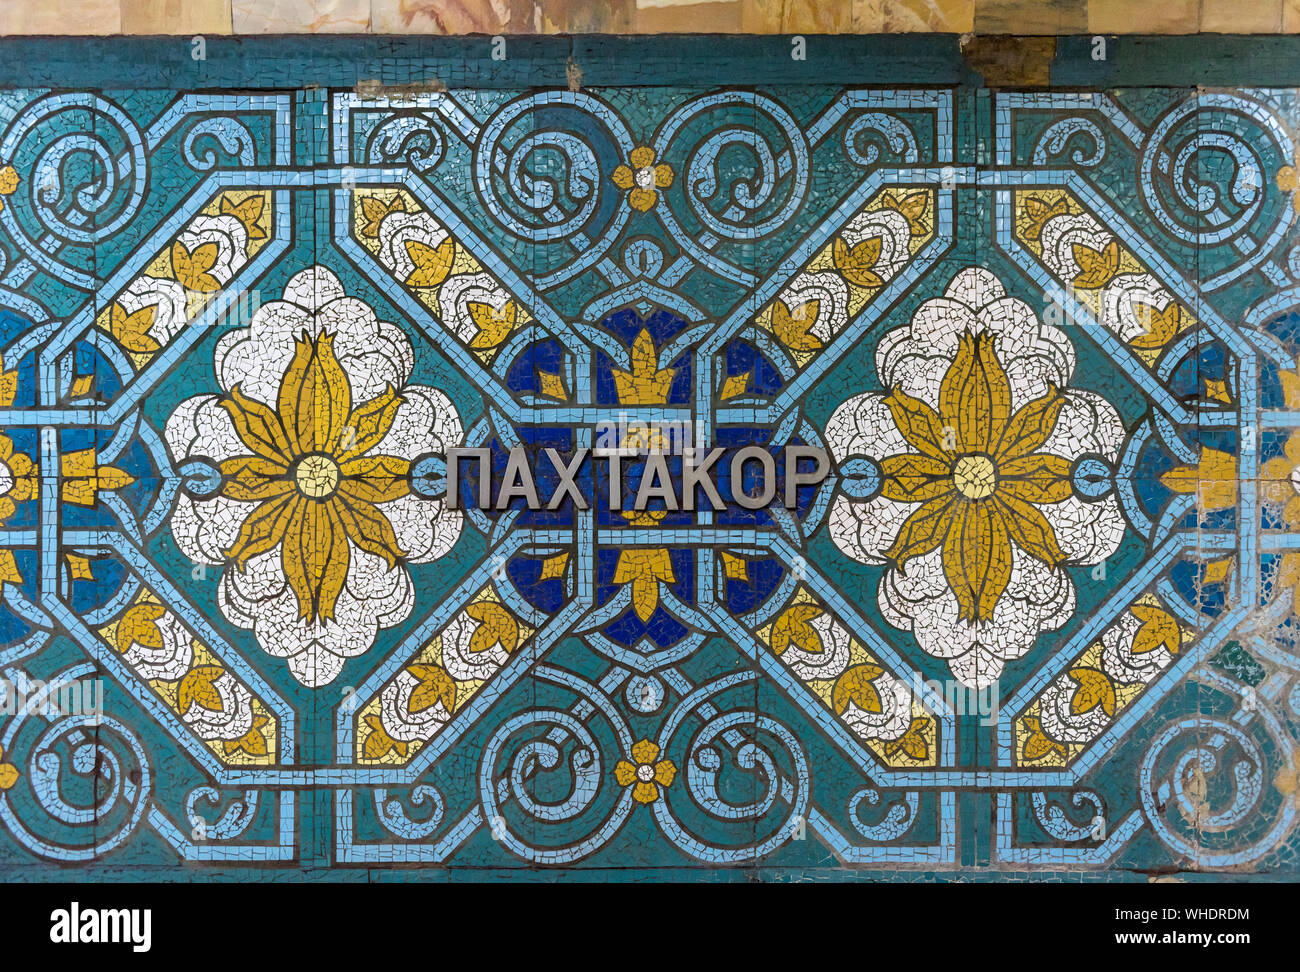 Interior decoration of Pakhtakor Metro station, Tashkent, Uzbekistan Stock Photo